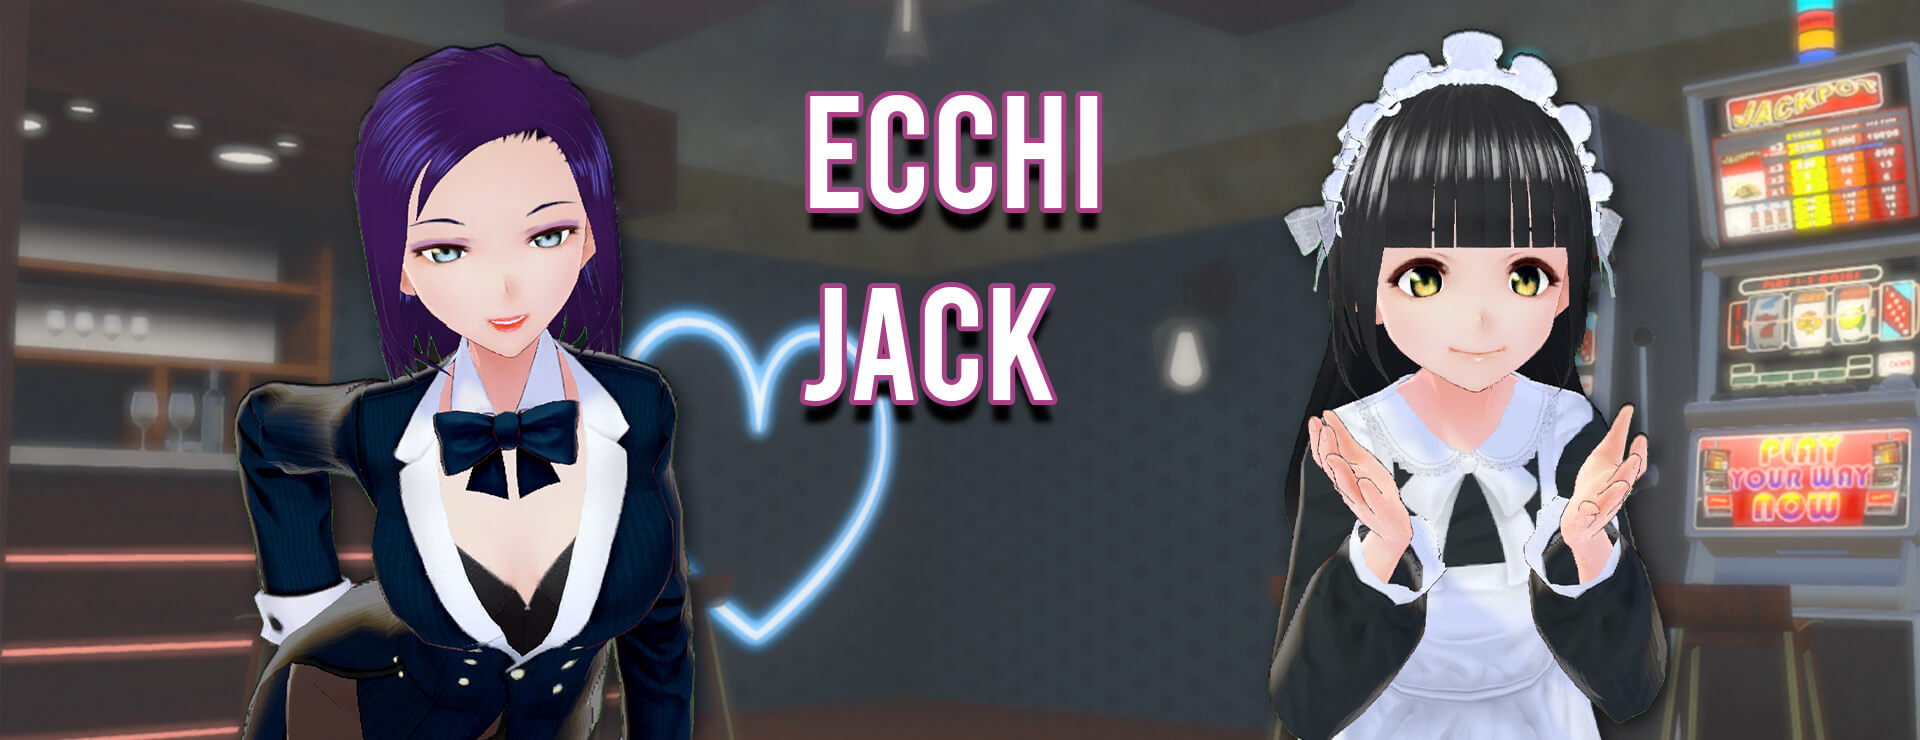 Ecchi Jack - カジュアル ゲーム